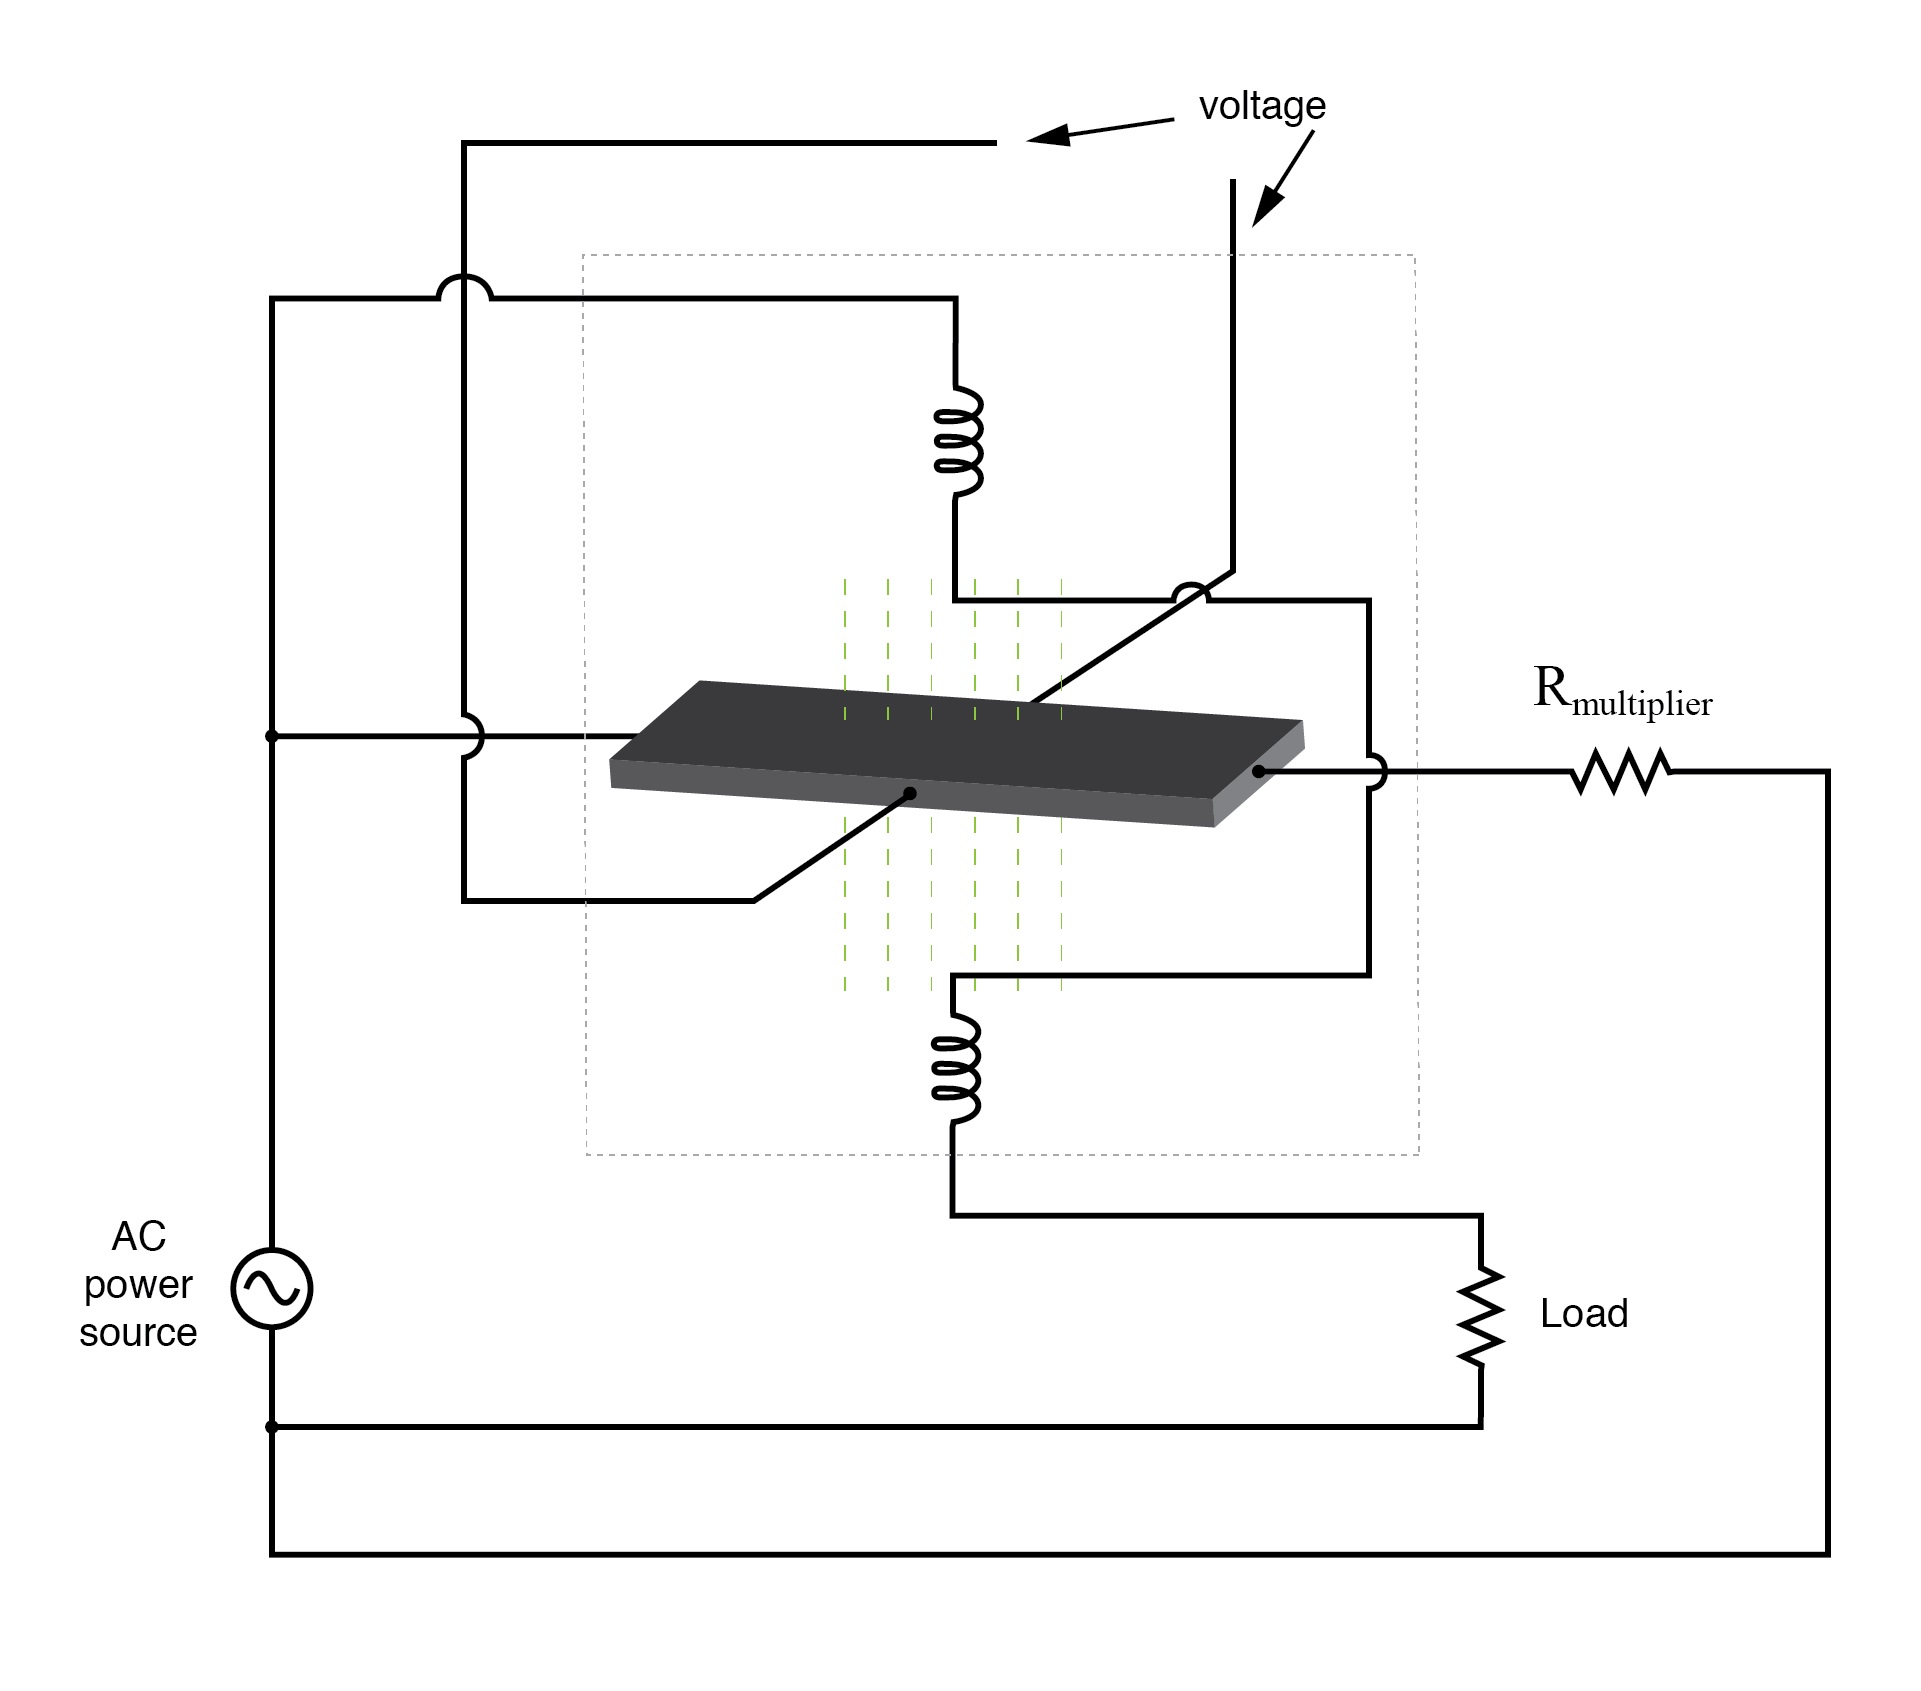 Hall effect power sensor measures instantaneous power.